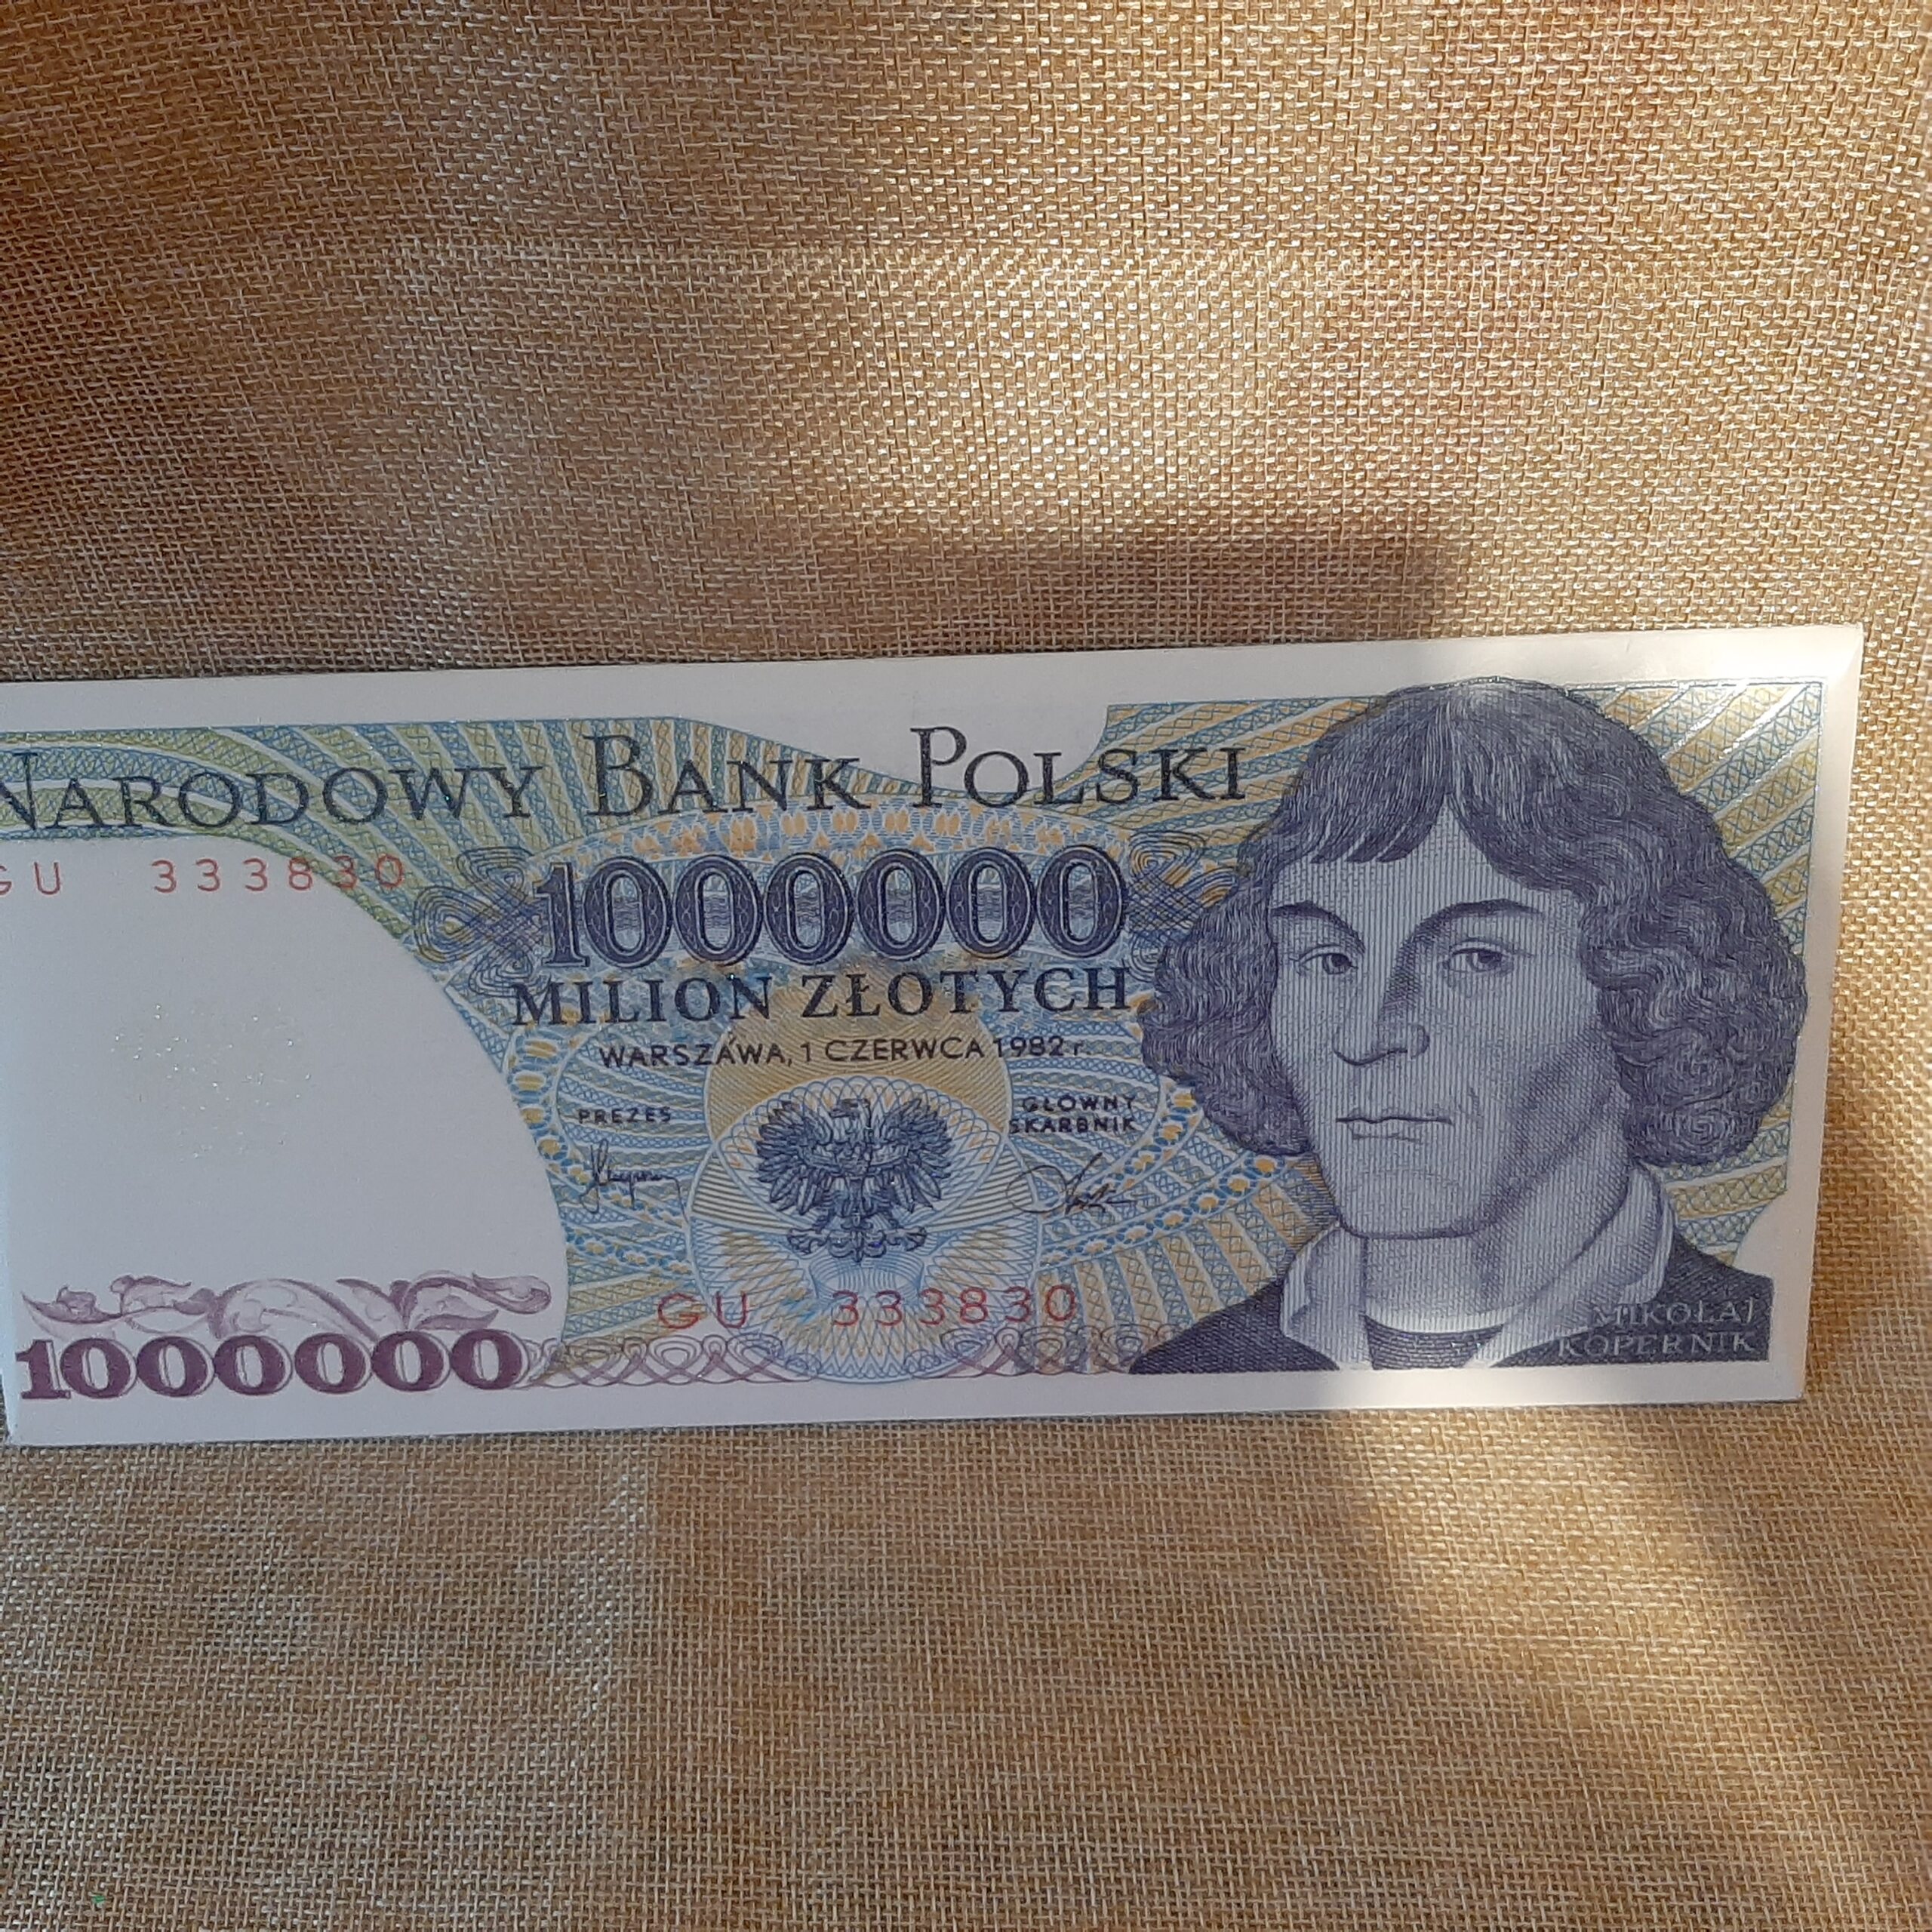 Czekolada Banknot Kopernik 60g